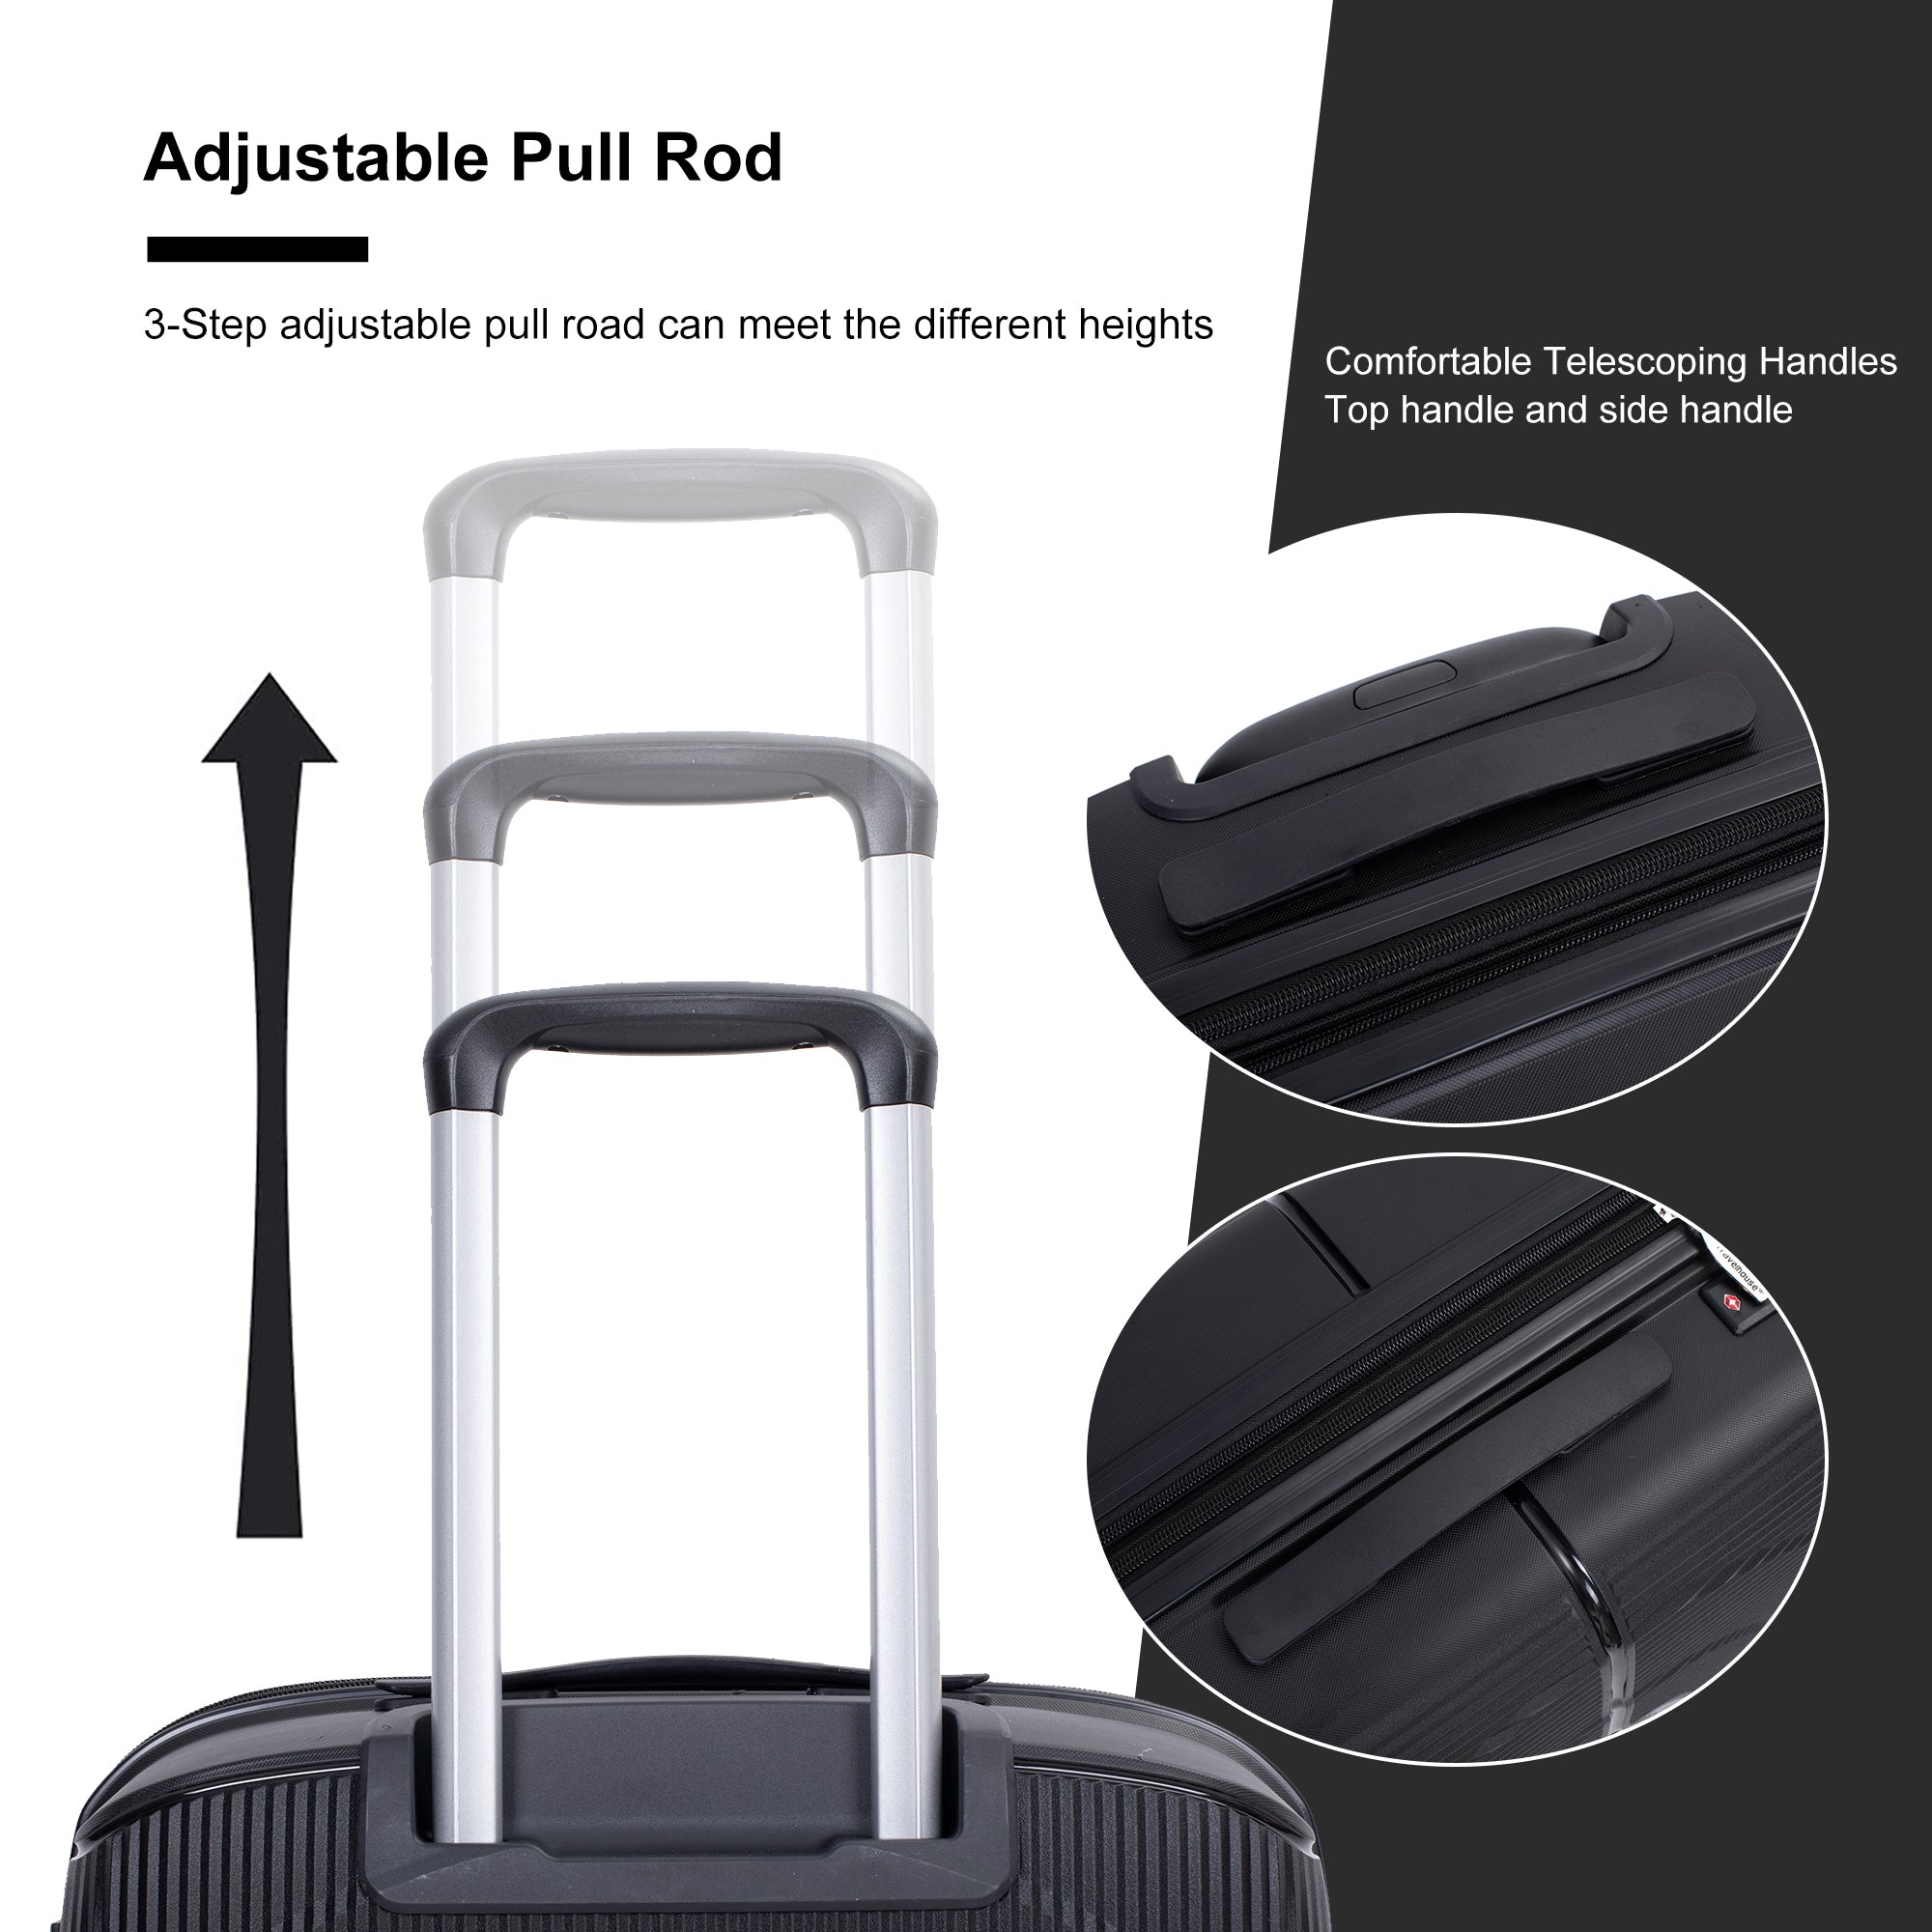 Expandable Hardshell Suitcase Double Spinner Wheels PP black-polypropylene